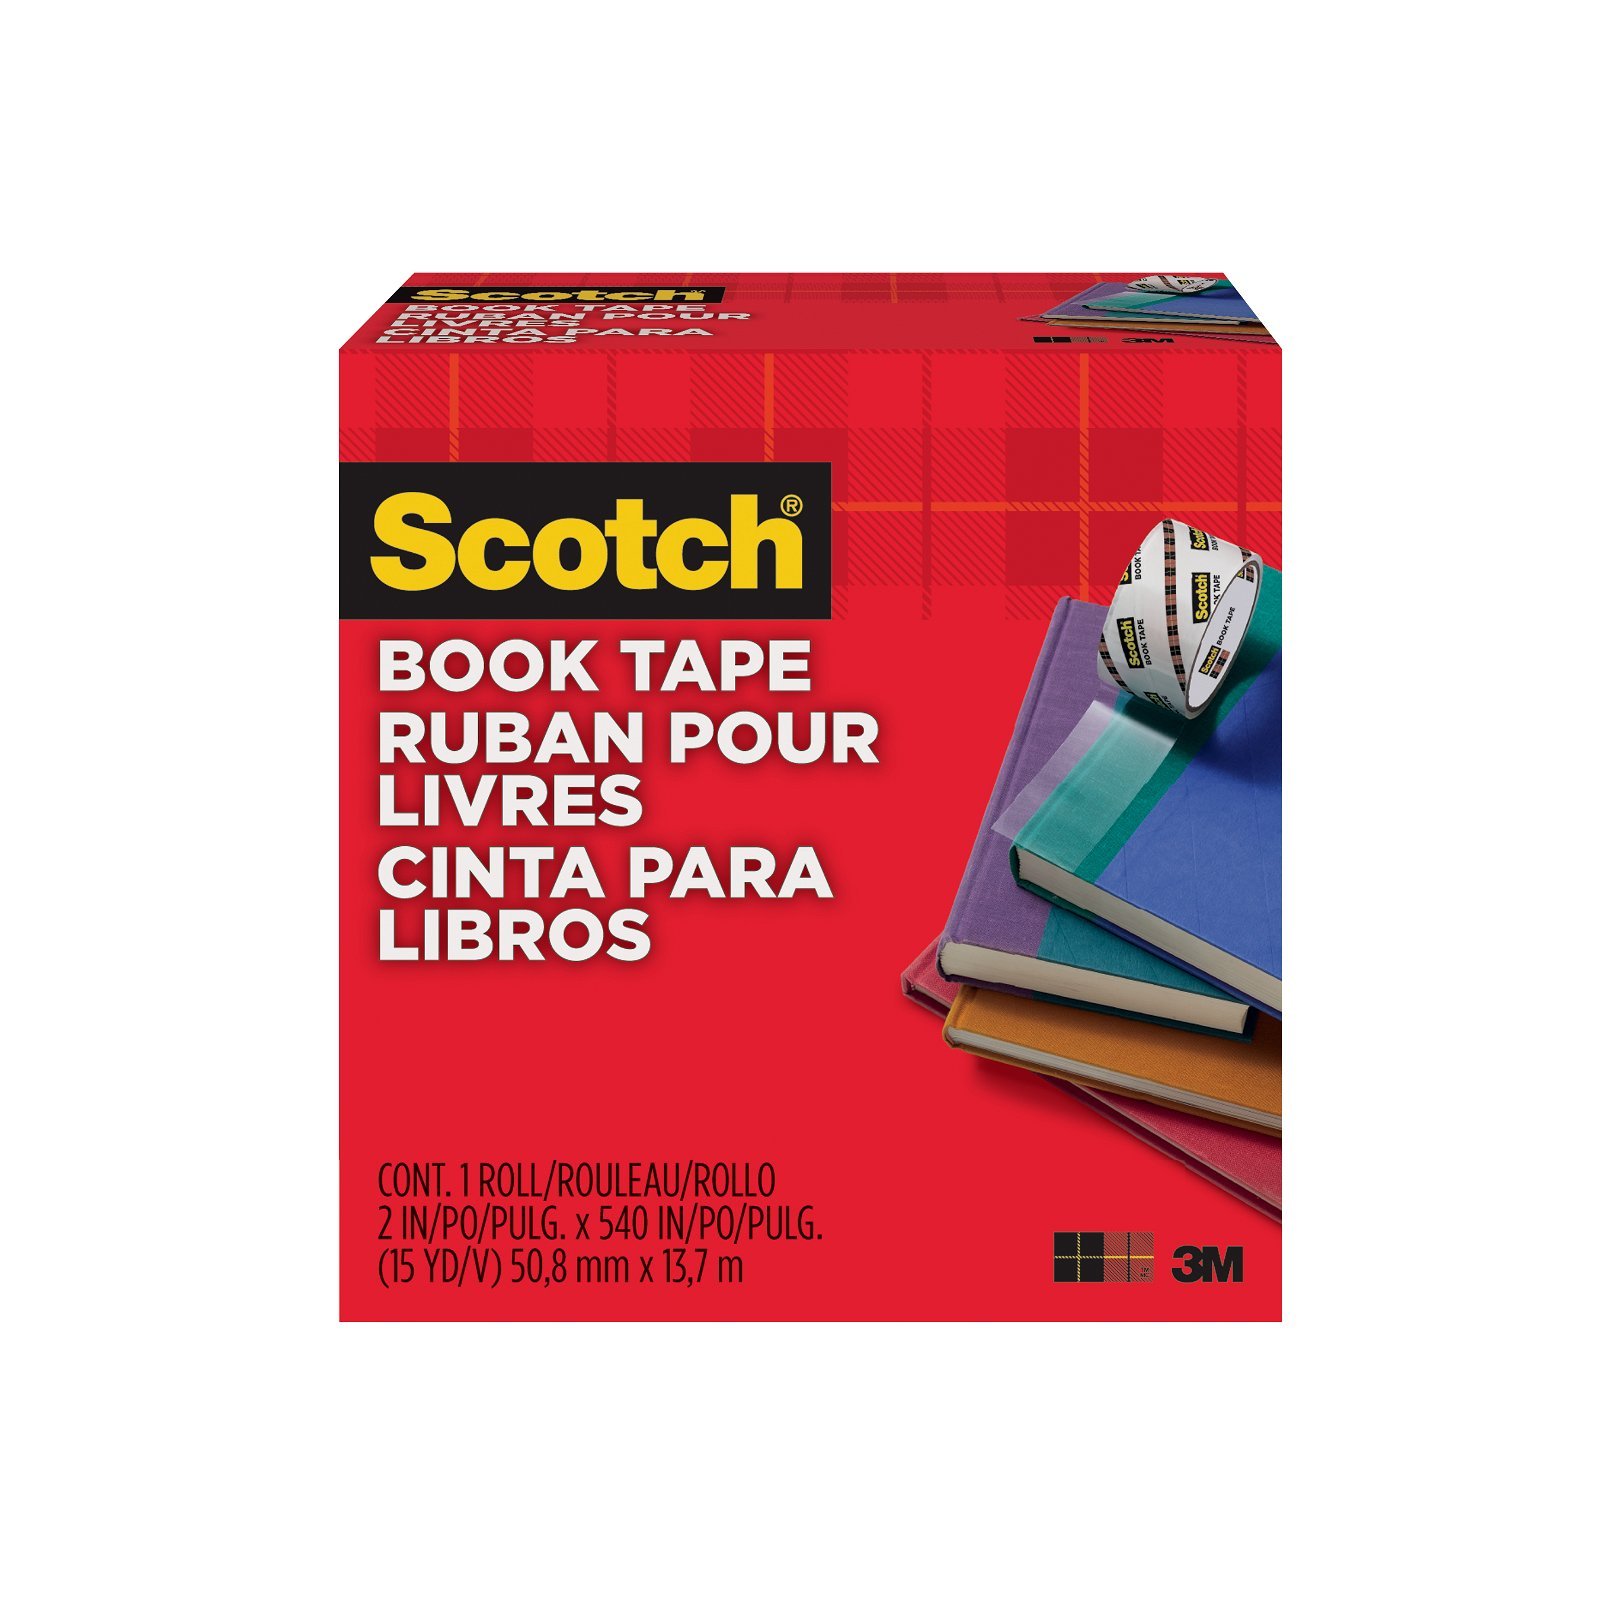 Scotch 845 bogtape